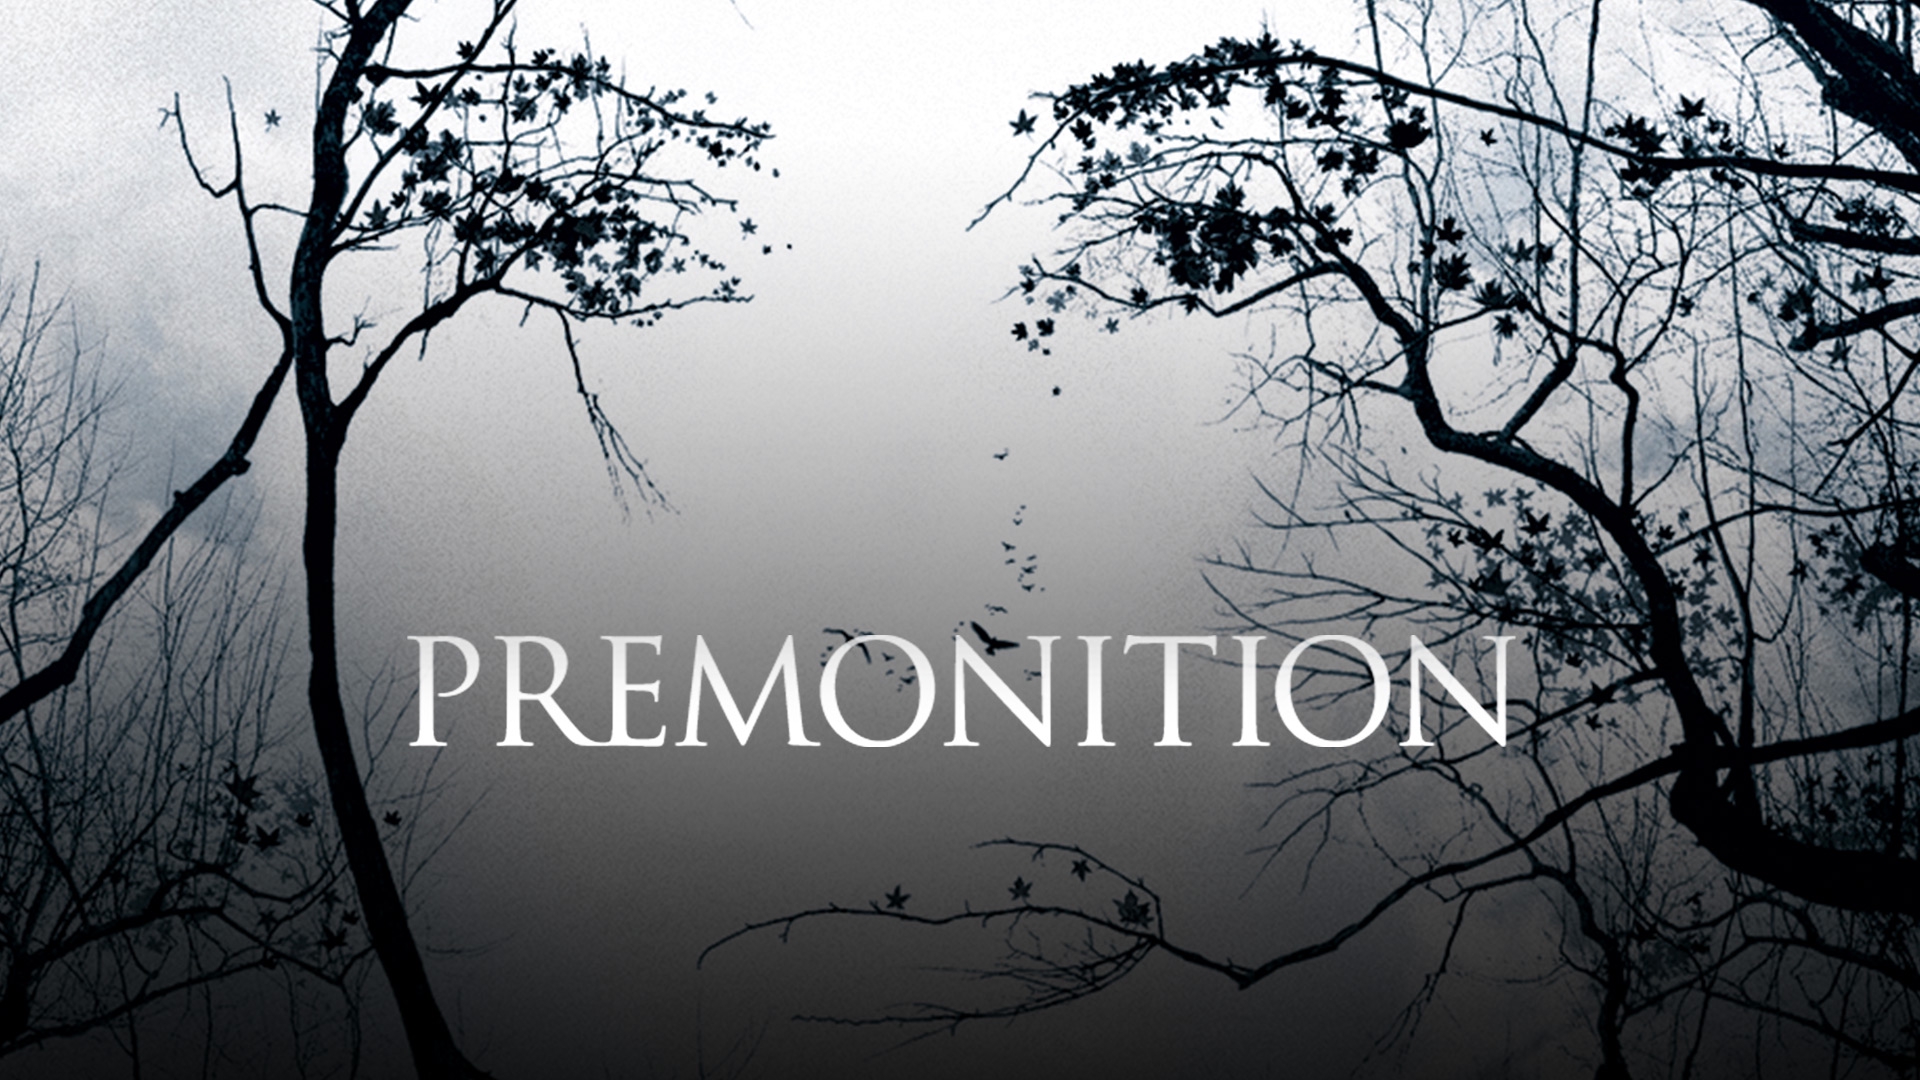 Sandra Bullock's 'Premonition' film is improbable